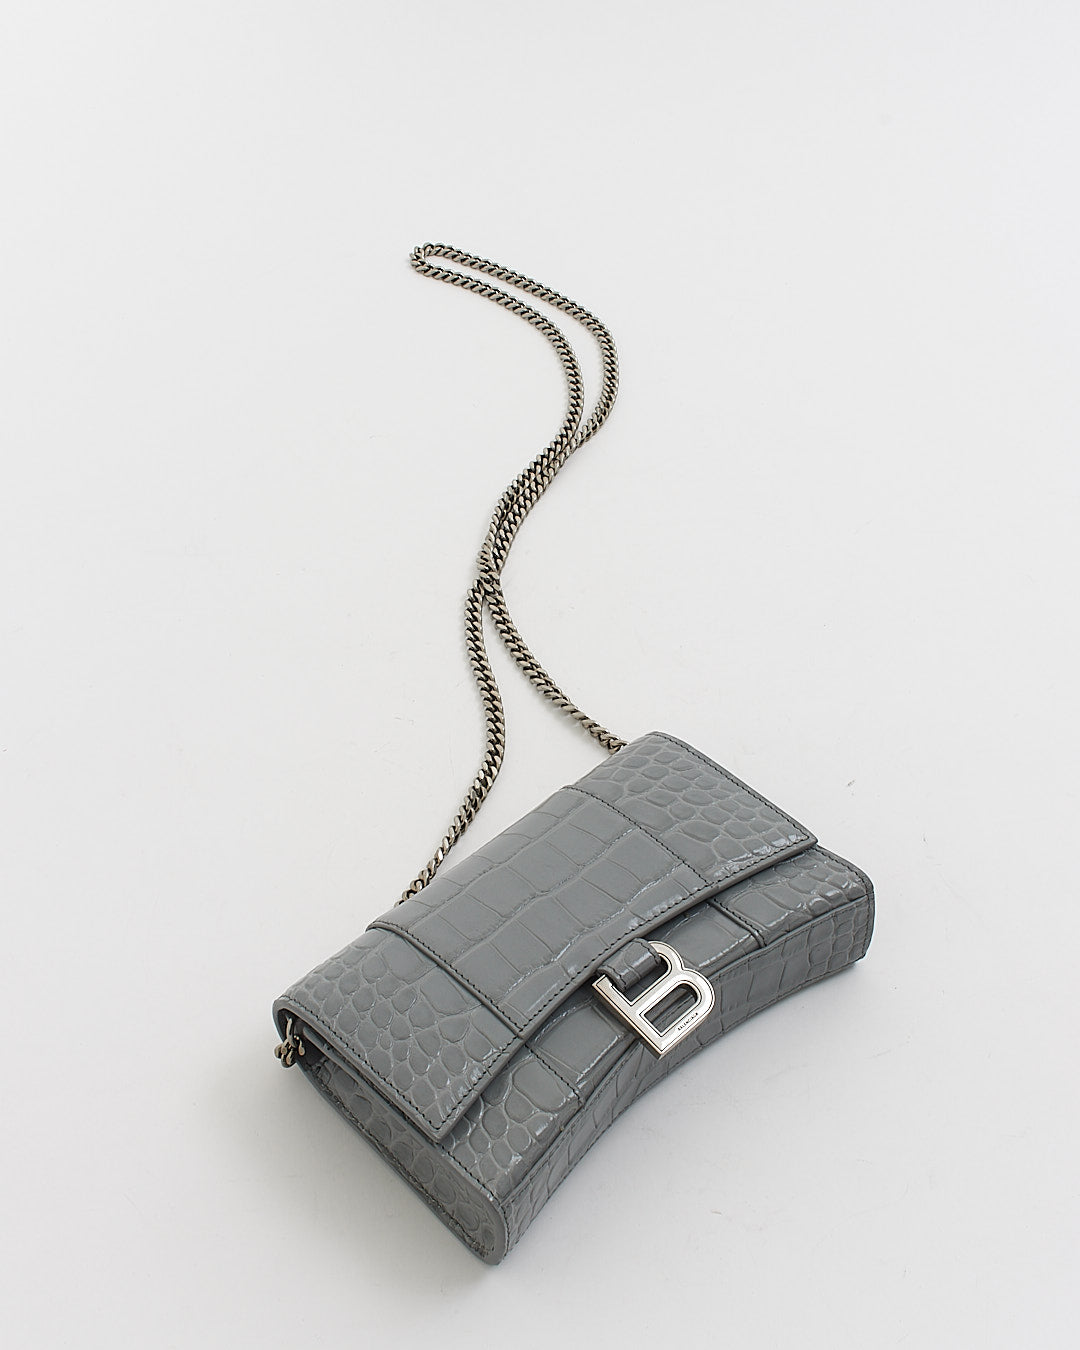 Balenciaga Sac à main portefeuille sur chaîne gris brillant en relief croco